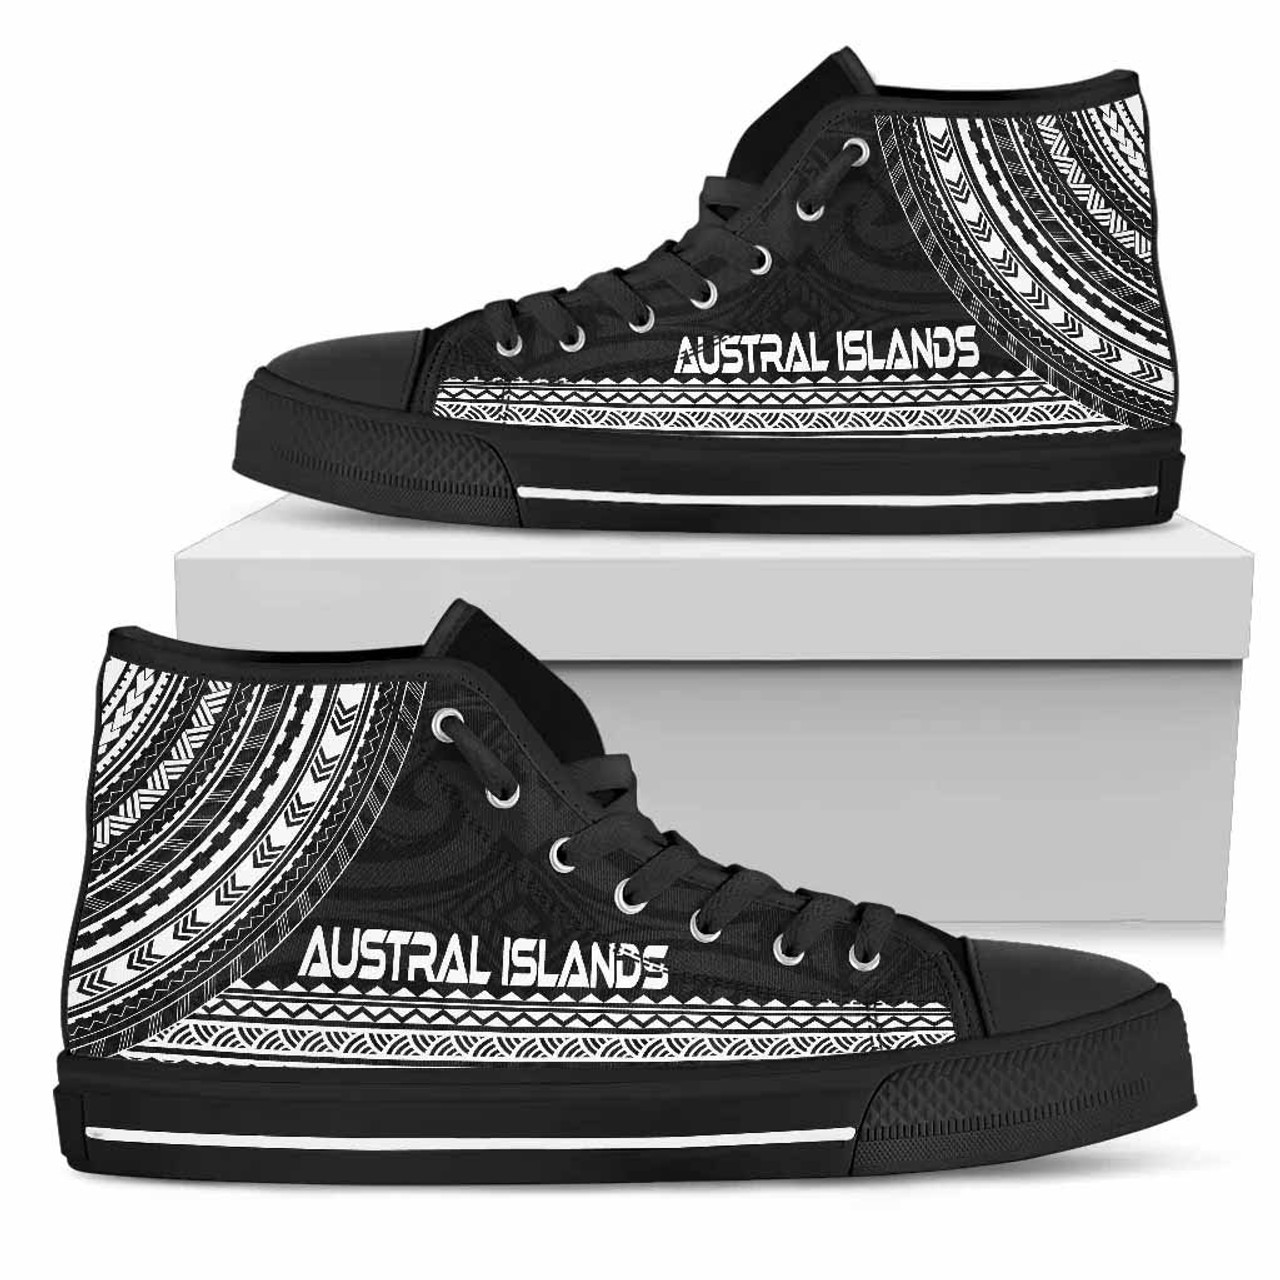 Austral Islands High Top Shoes - Polynesian Black Chief Version 4